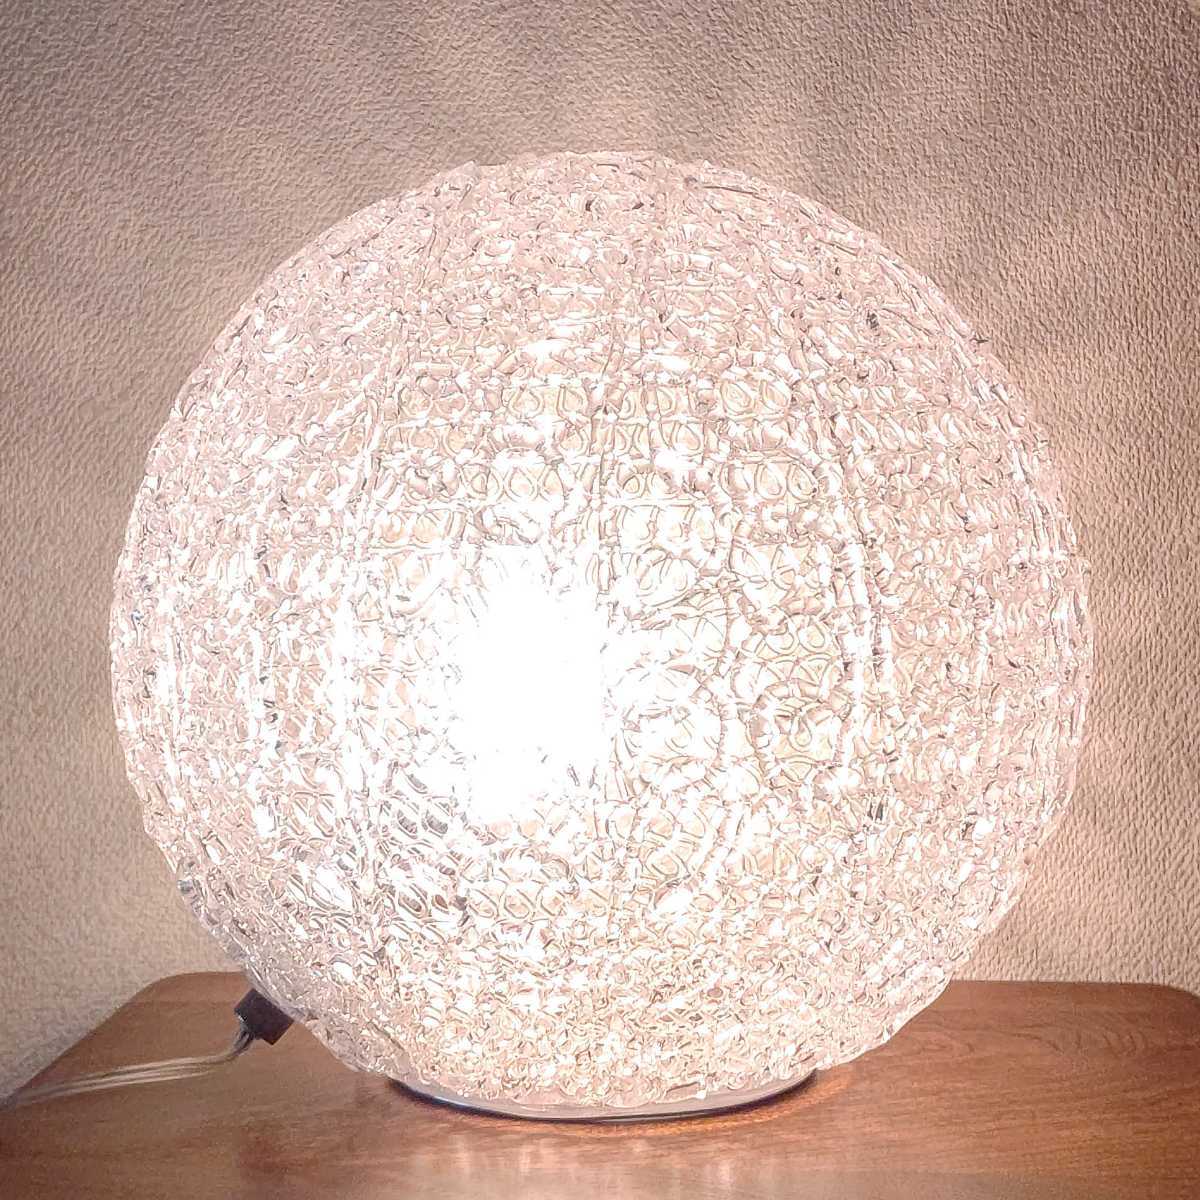 Francfranc アペーゴ フロアランプ 球体 フランフラン 照明器具 照明